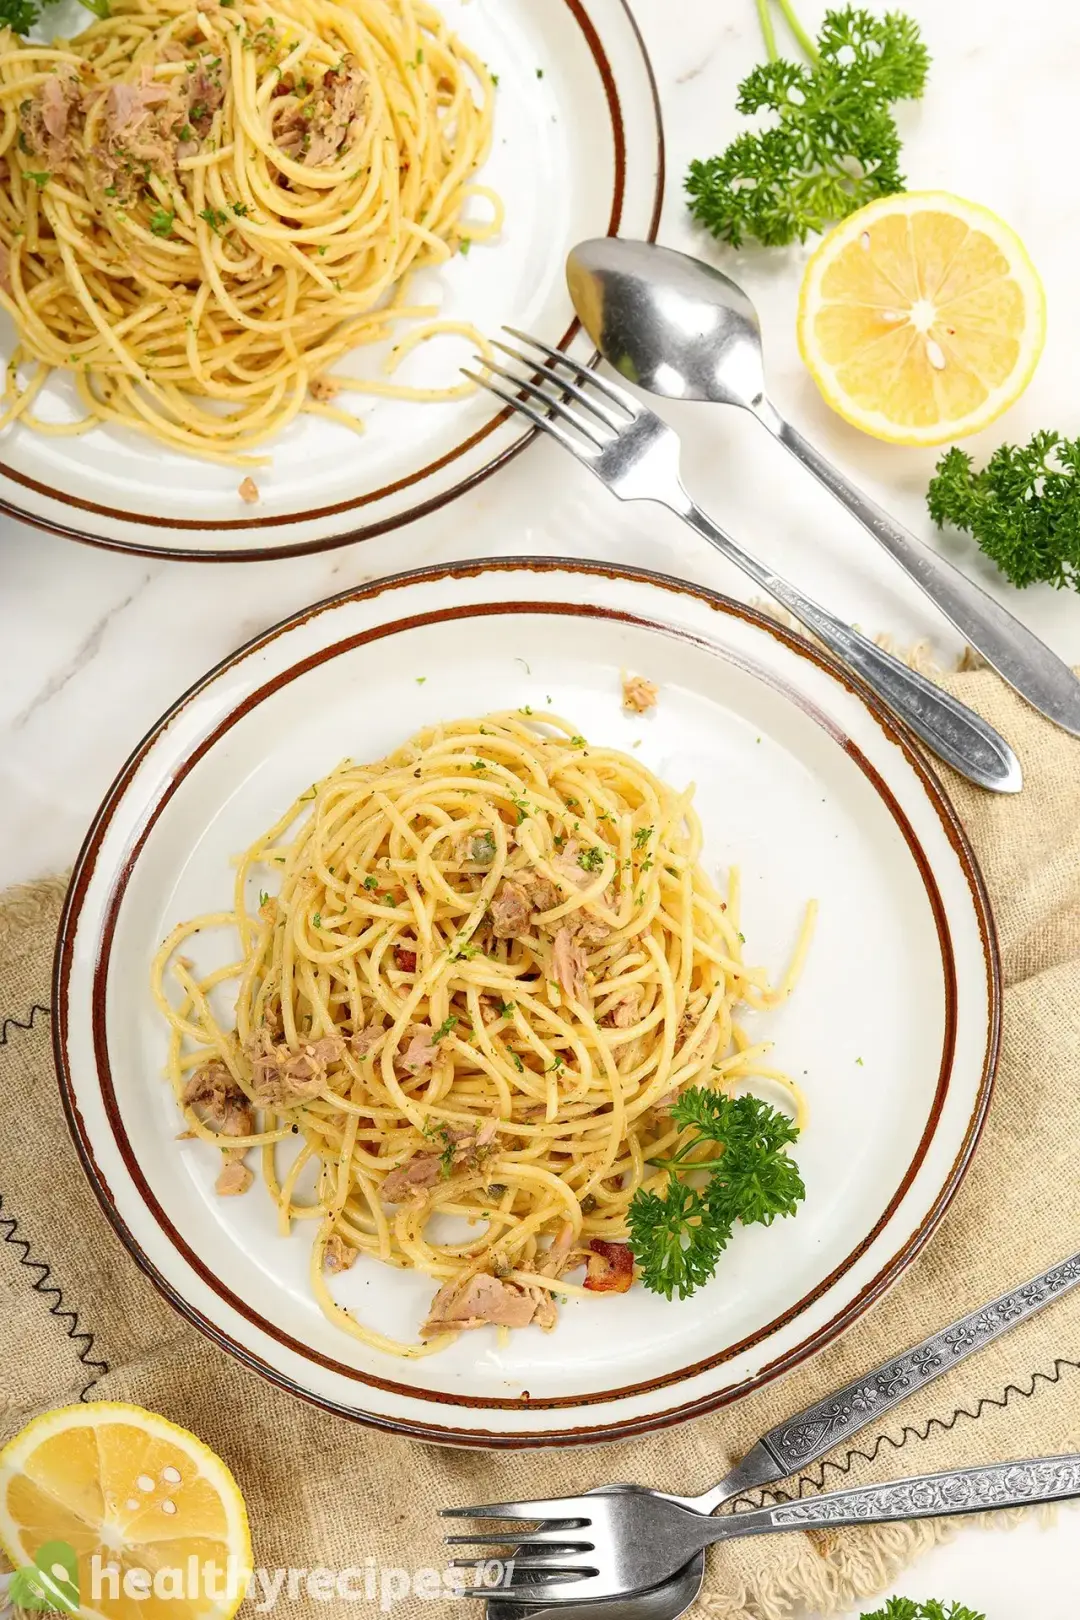 How to Zest a Lemon for tuna spaghetti